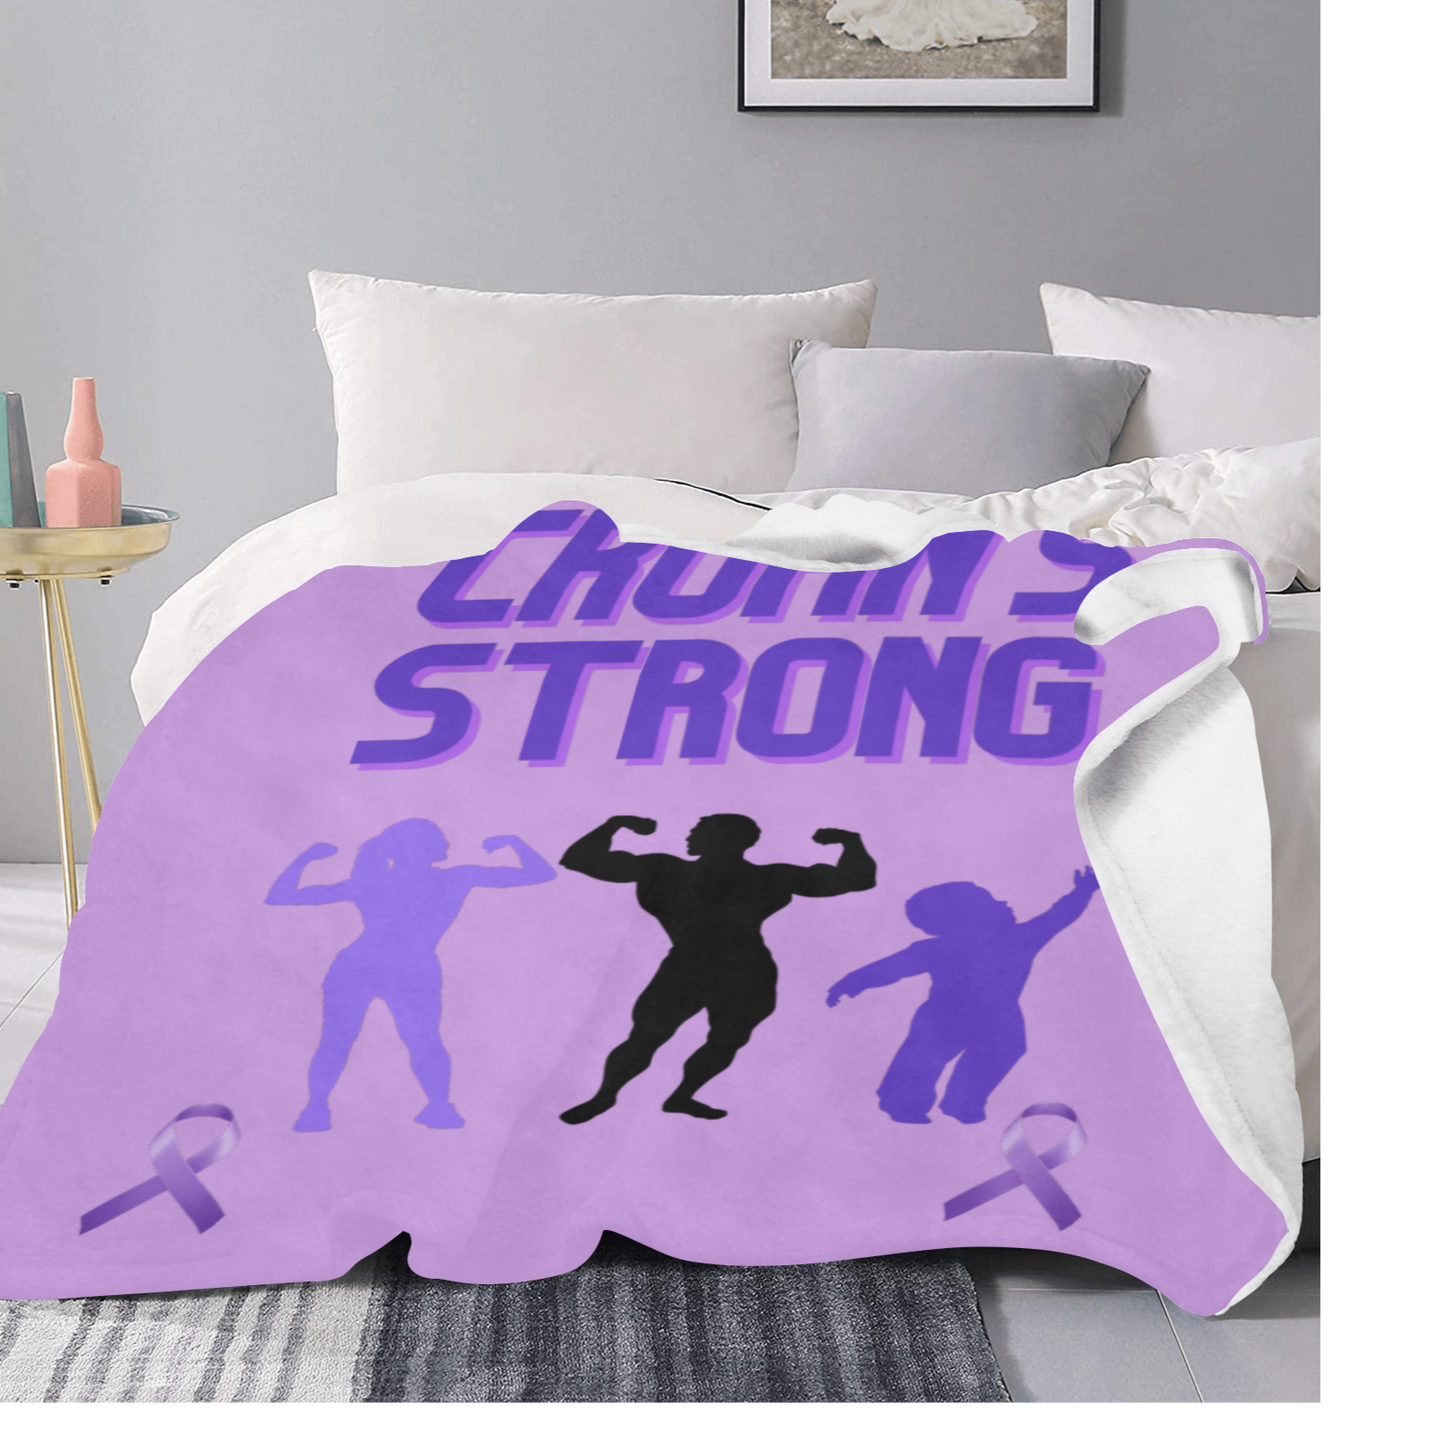 Crohn's Strong Micro Fleece Blanket